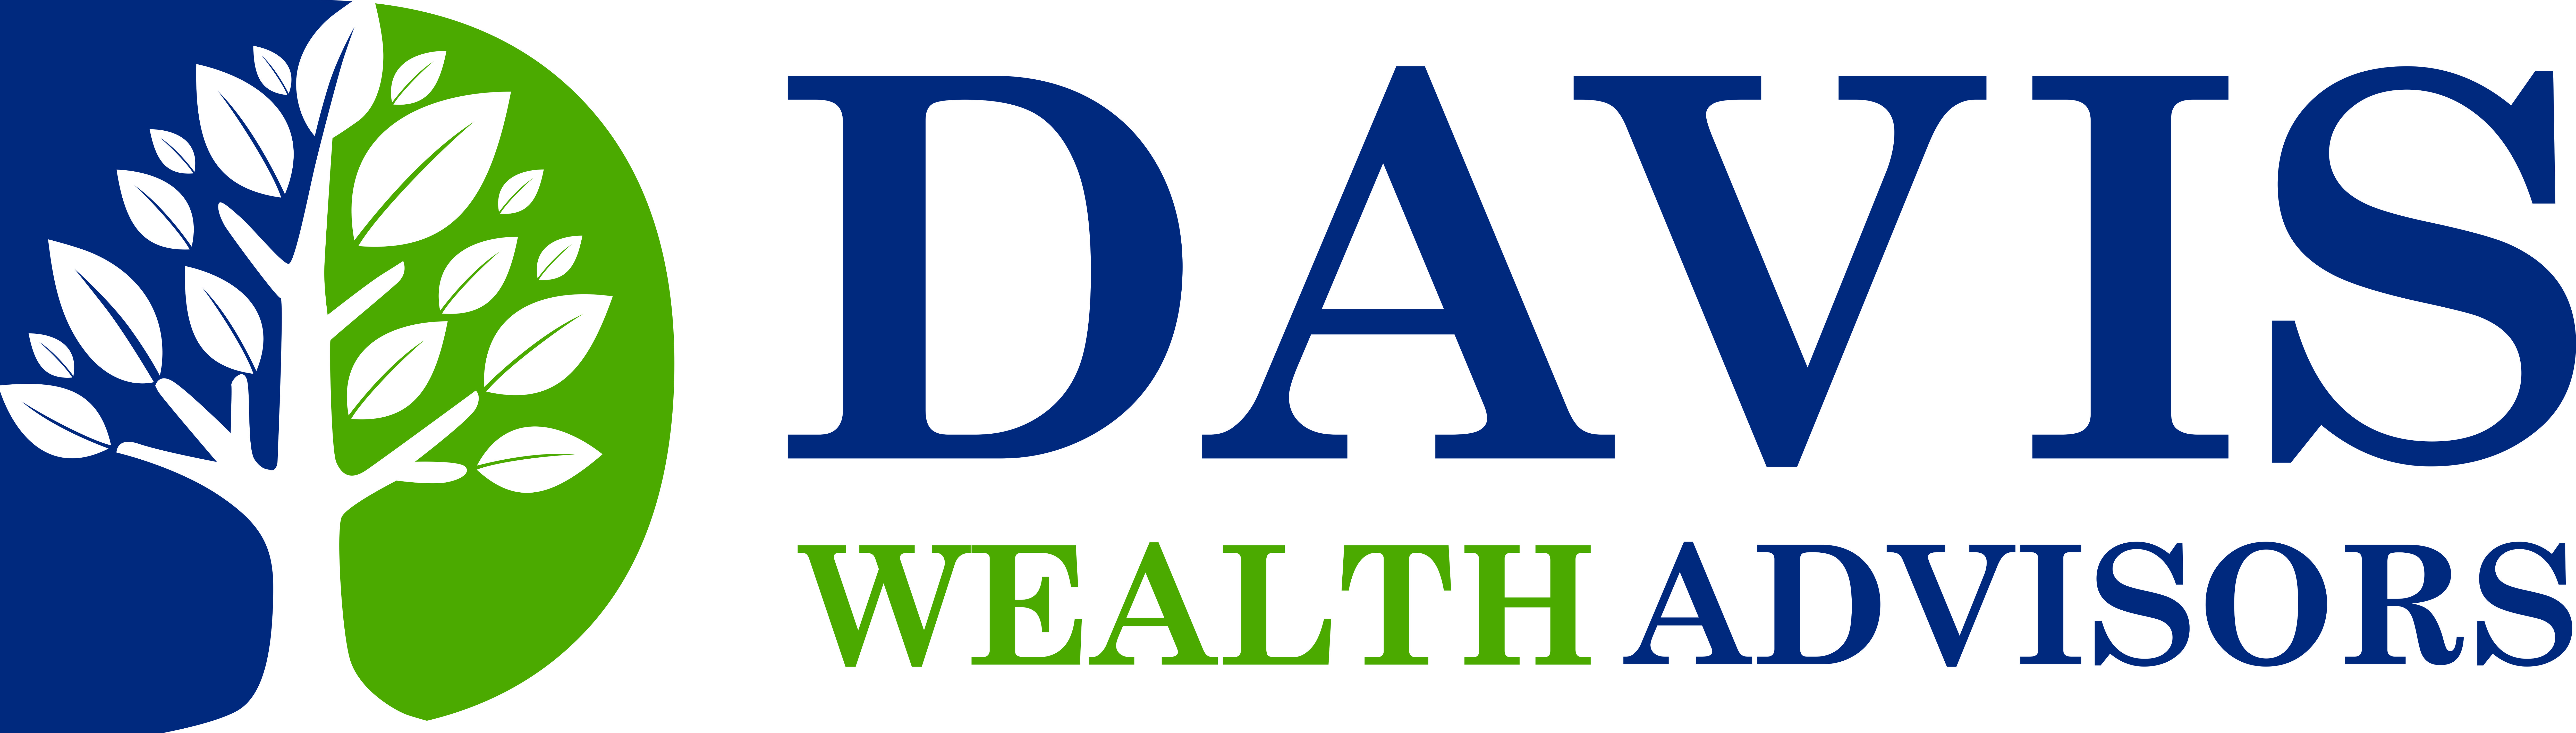 Davis Wealth Advisors